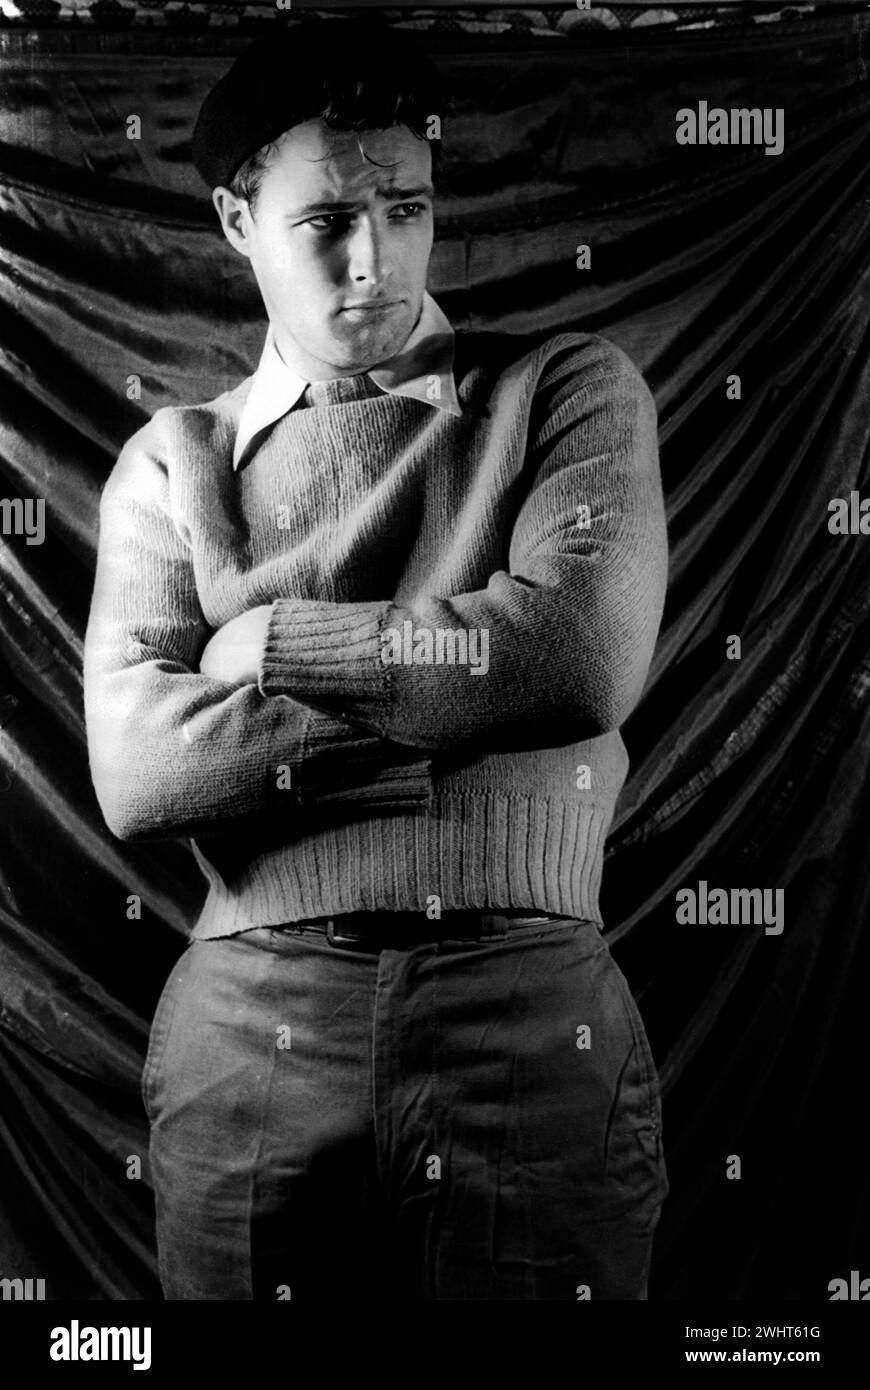 Carl Van Vechten portrait photograph of Marlon Brando during the Broadway production of A Streetcar Named Desire (December 27, 1948) Stock Photo